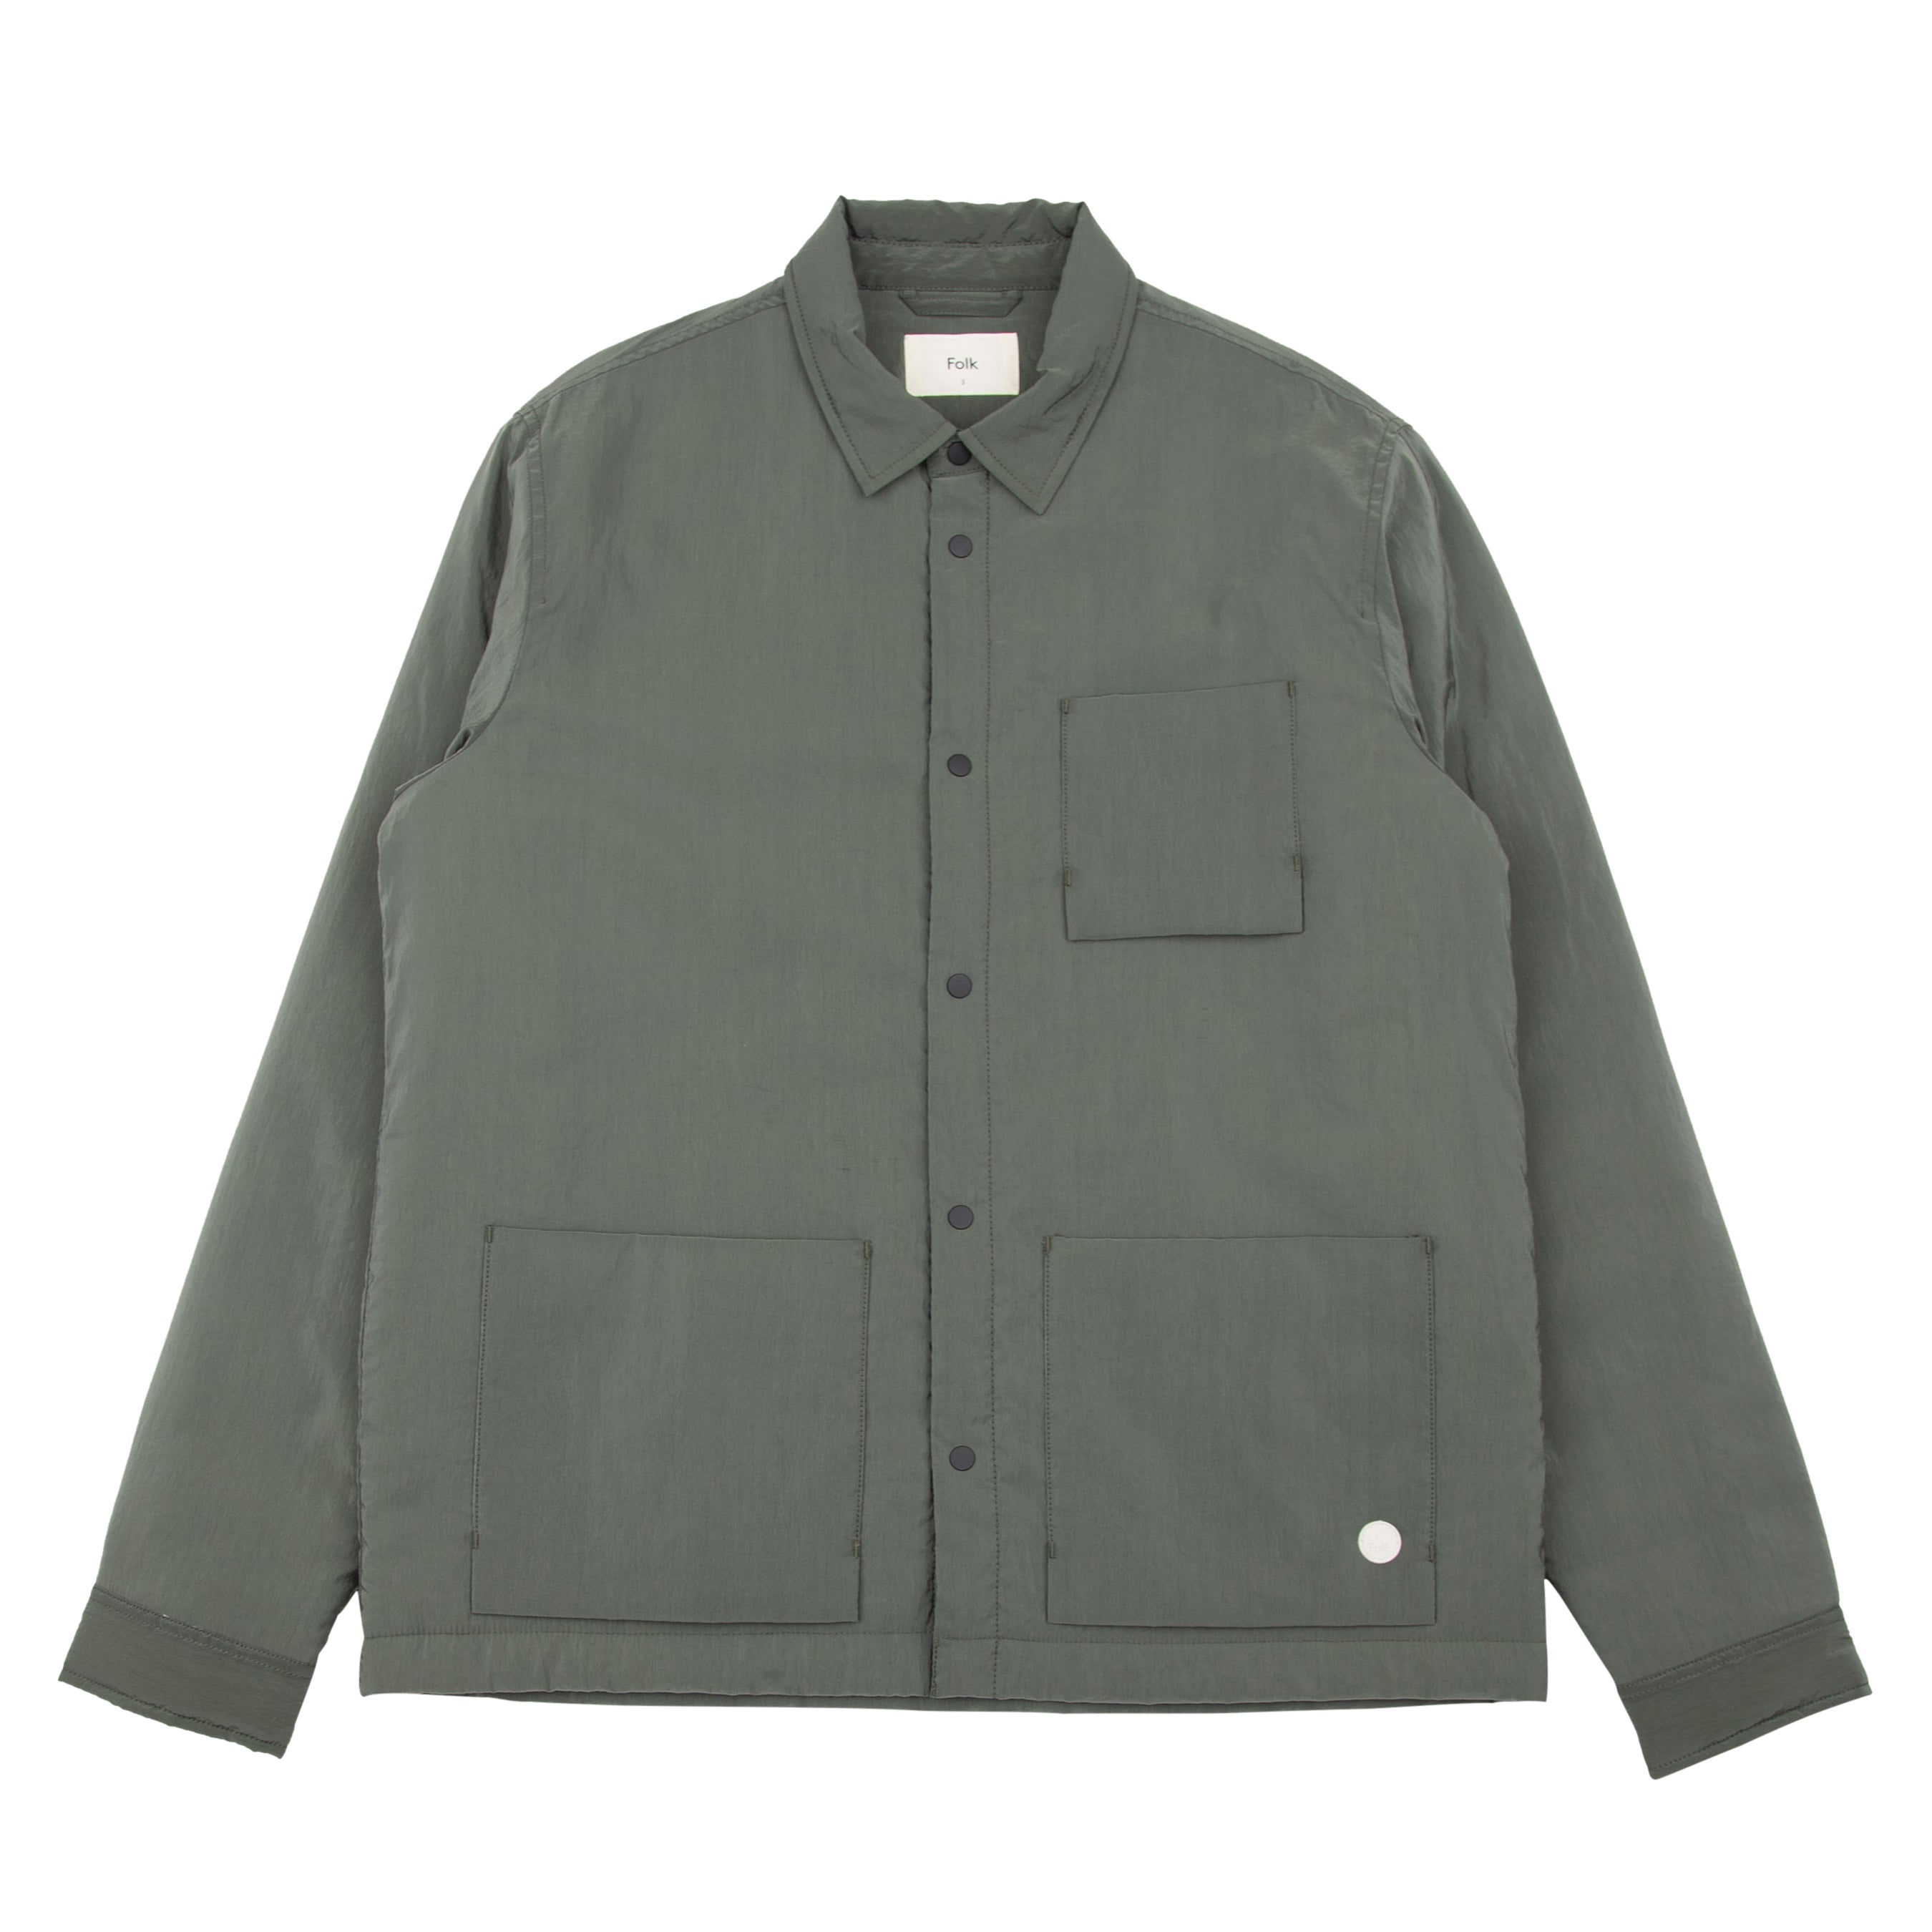 Folk | Wadded Assembly Jacket - Olive Nylon Texture